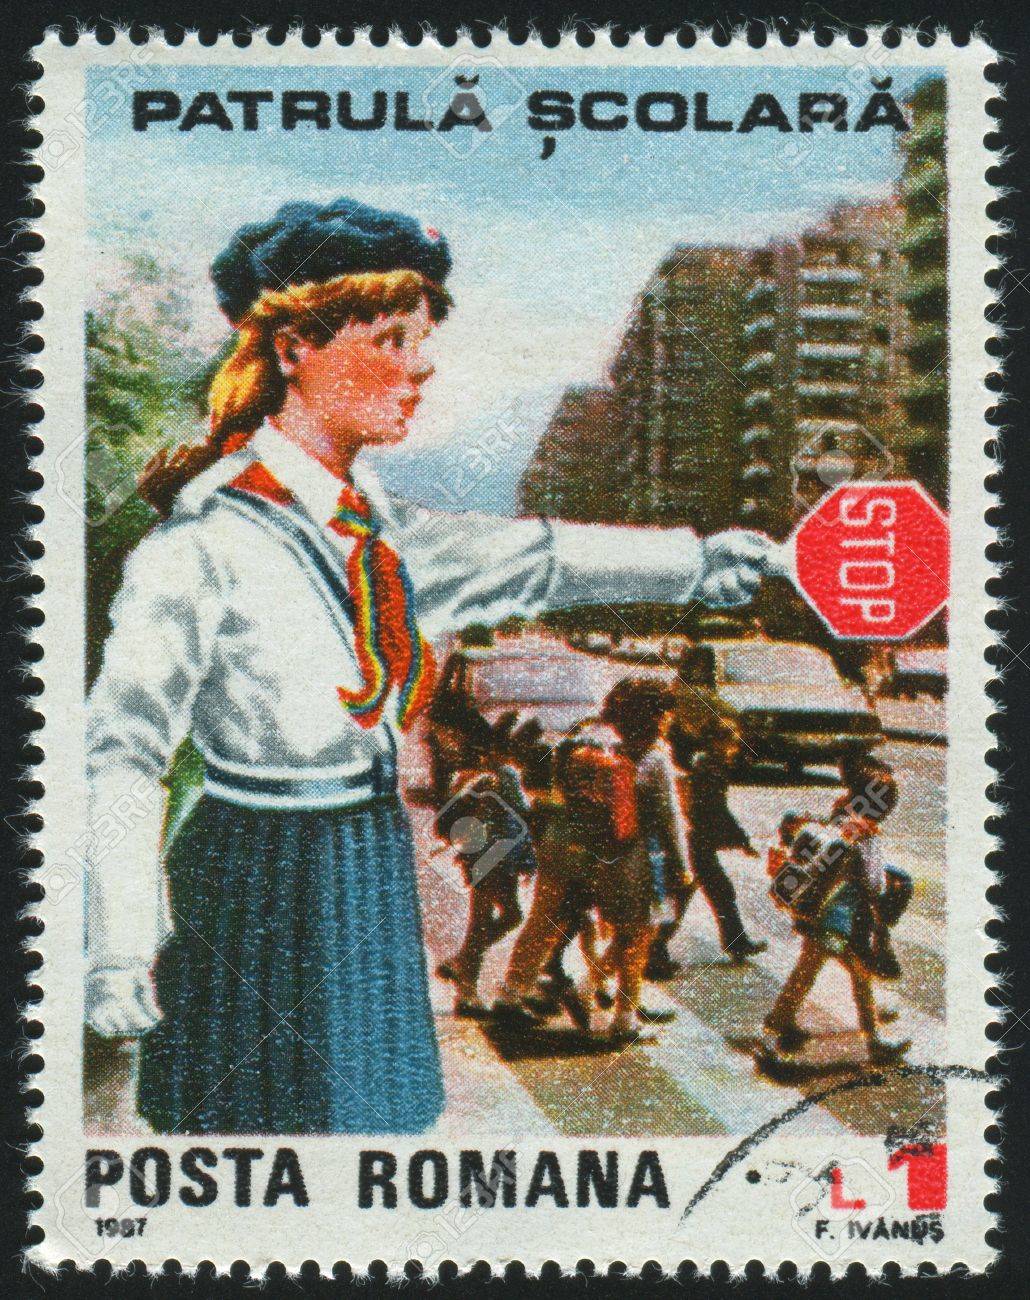 7257688-romania-circa-1987-stamp-printed-by-romania-show-young-pioneer-girl-as-crossing-guard-circa-1987-.jpg